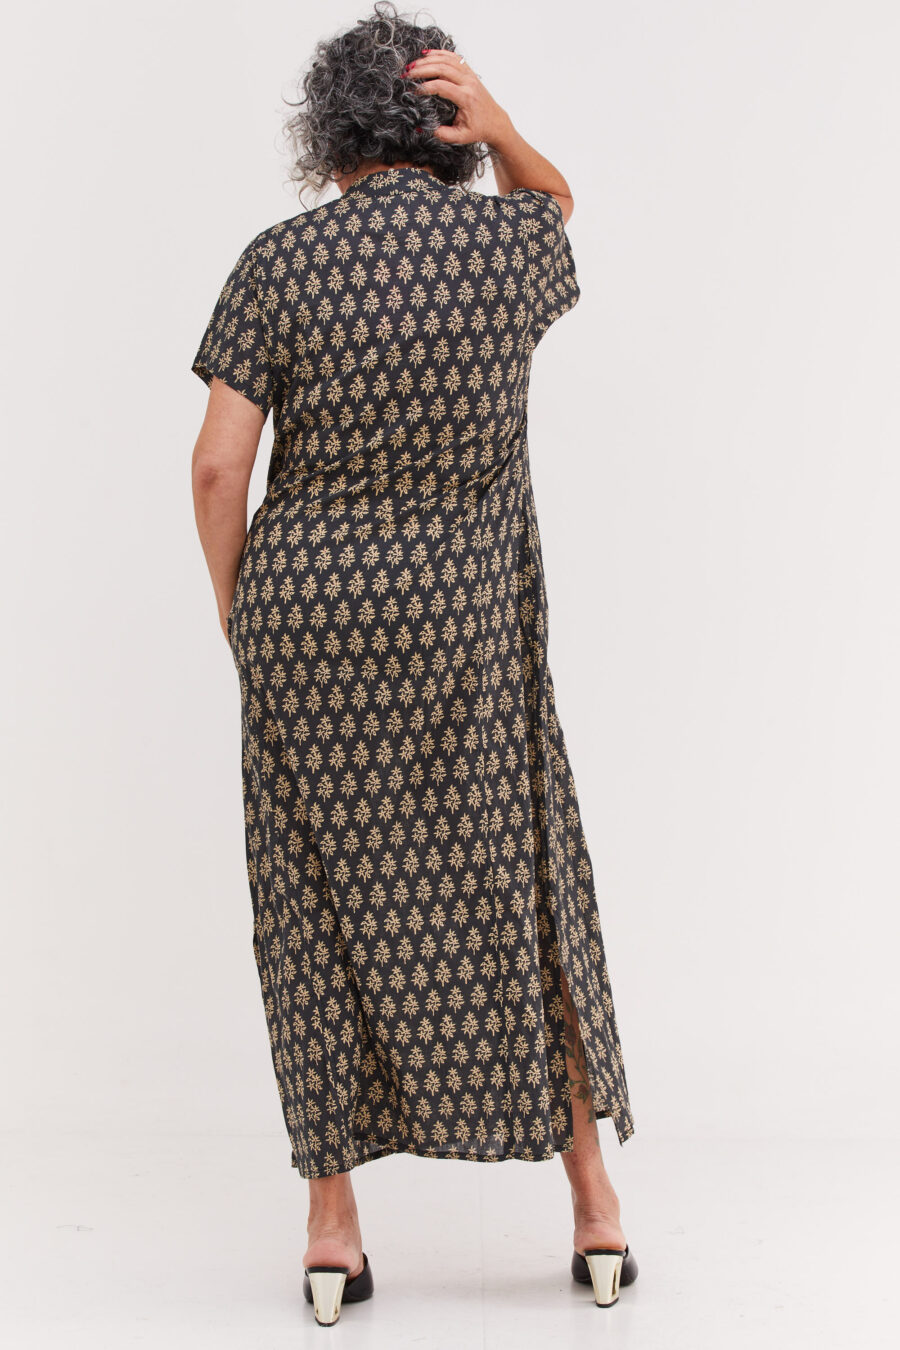 Jalabiya dress | Uniquely designed dress - Tokio print, black dress with cream colored oriental print by comfort zone boutique